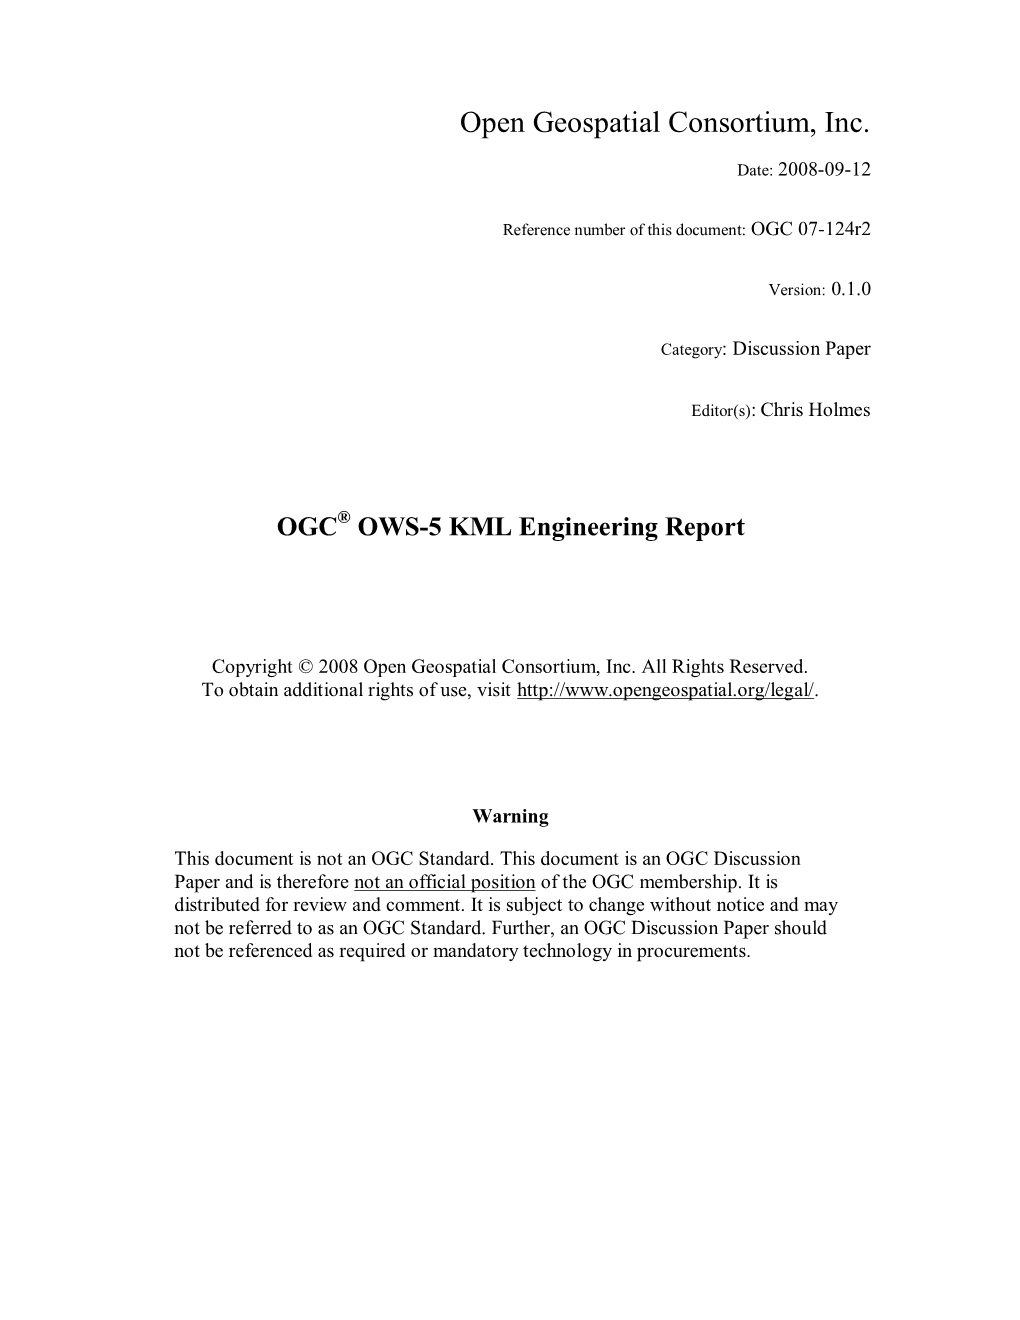 OWS-5 KML Engineering Report